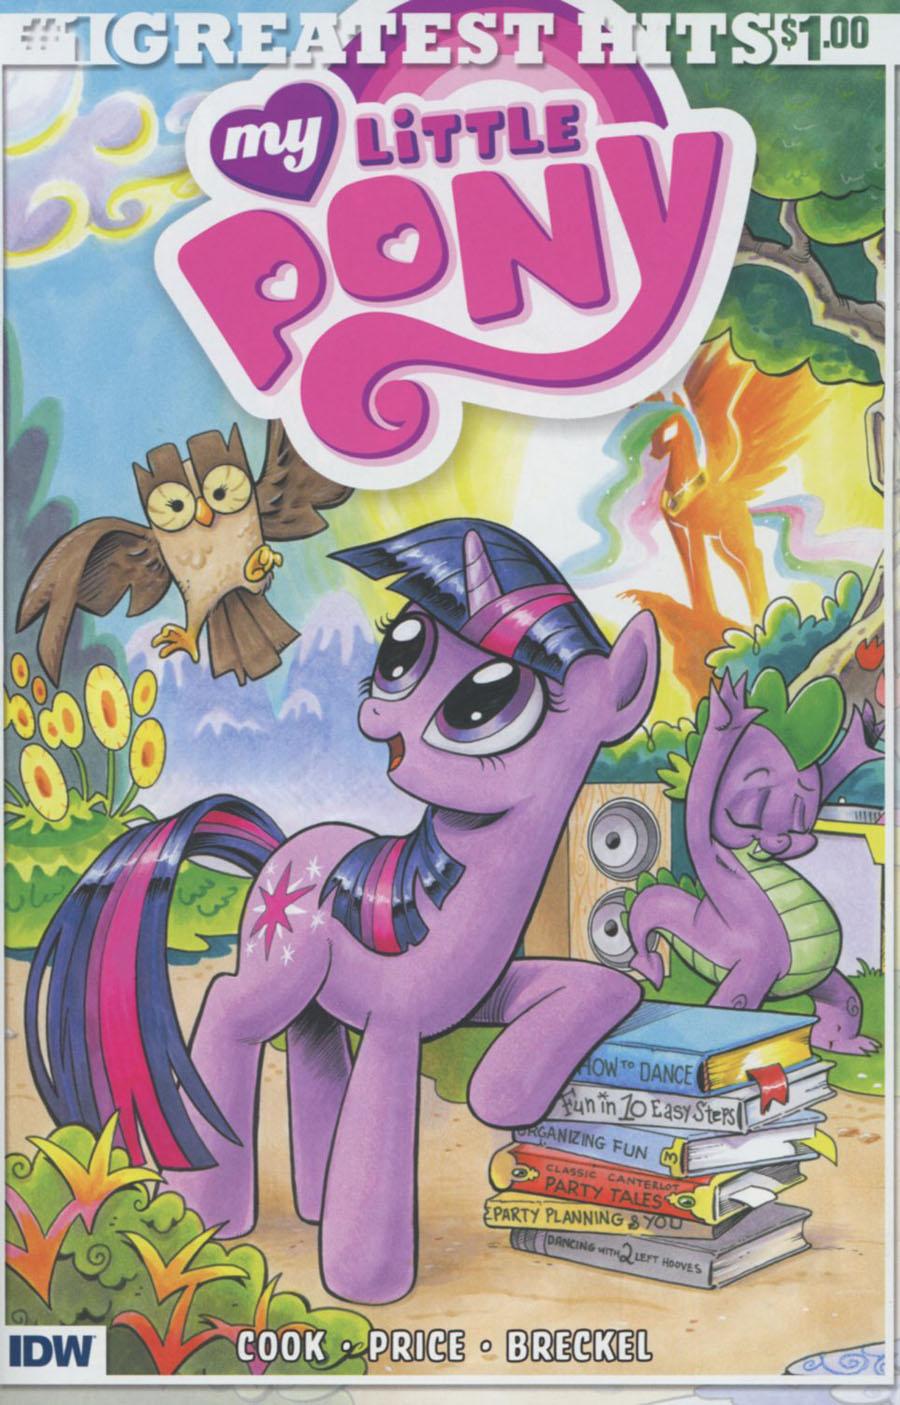 My Little Pony Friendship Is Magic Vol. 1 #1